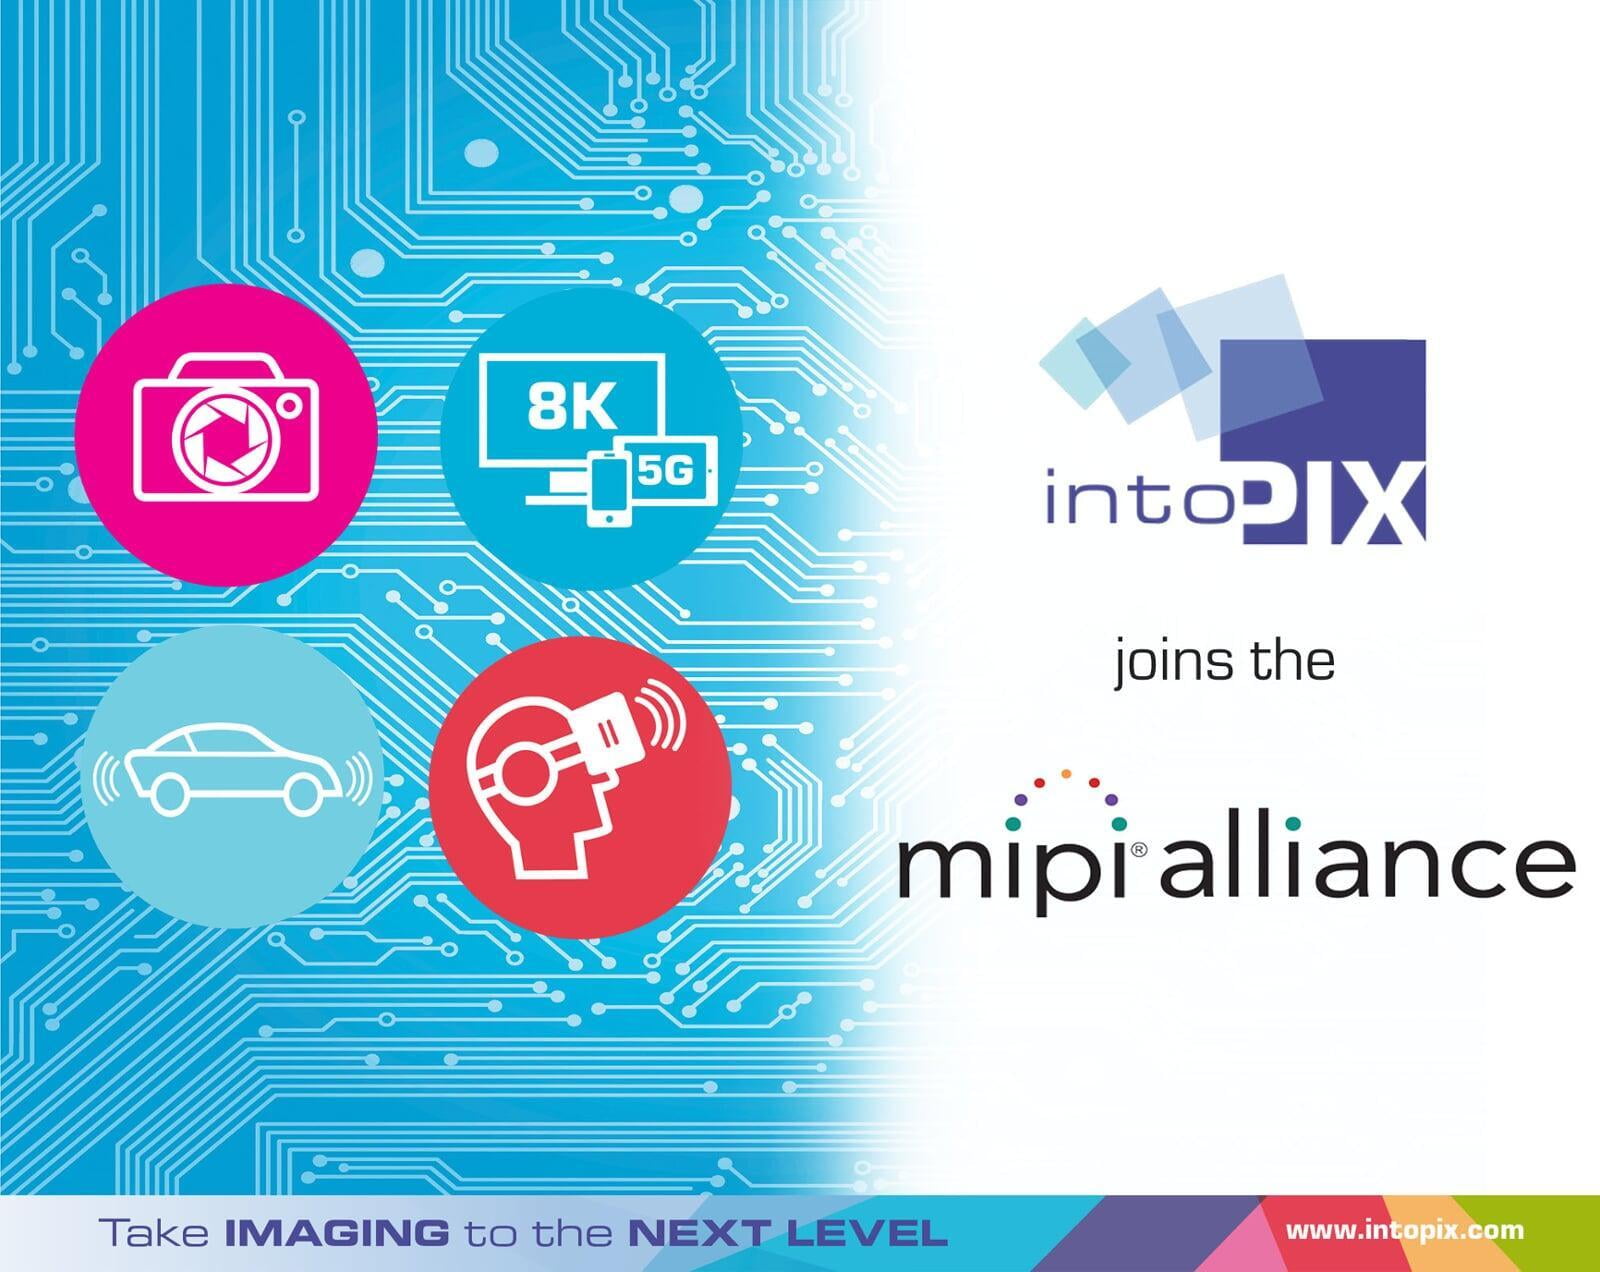 intoPIXはMIPIアライアンスに参加します。